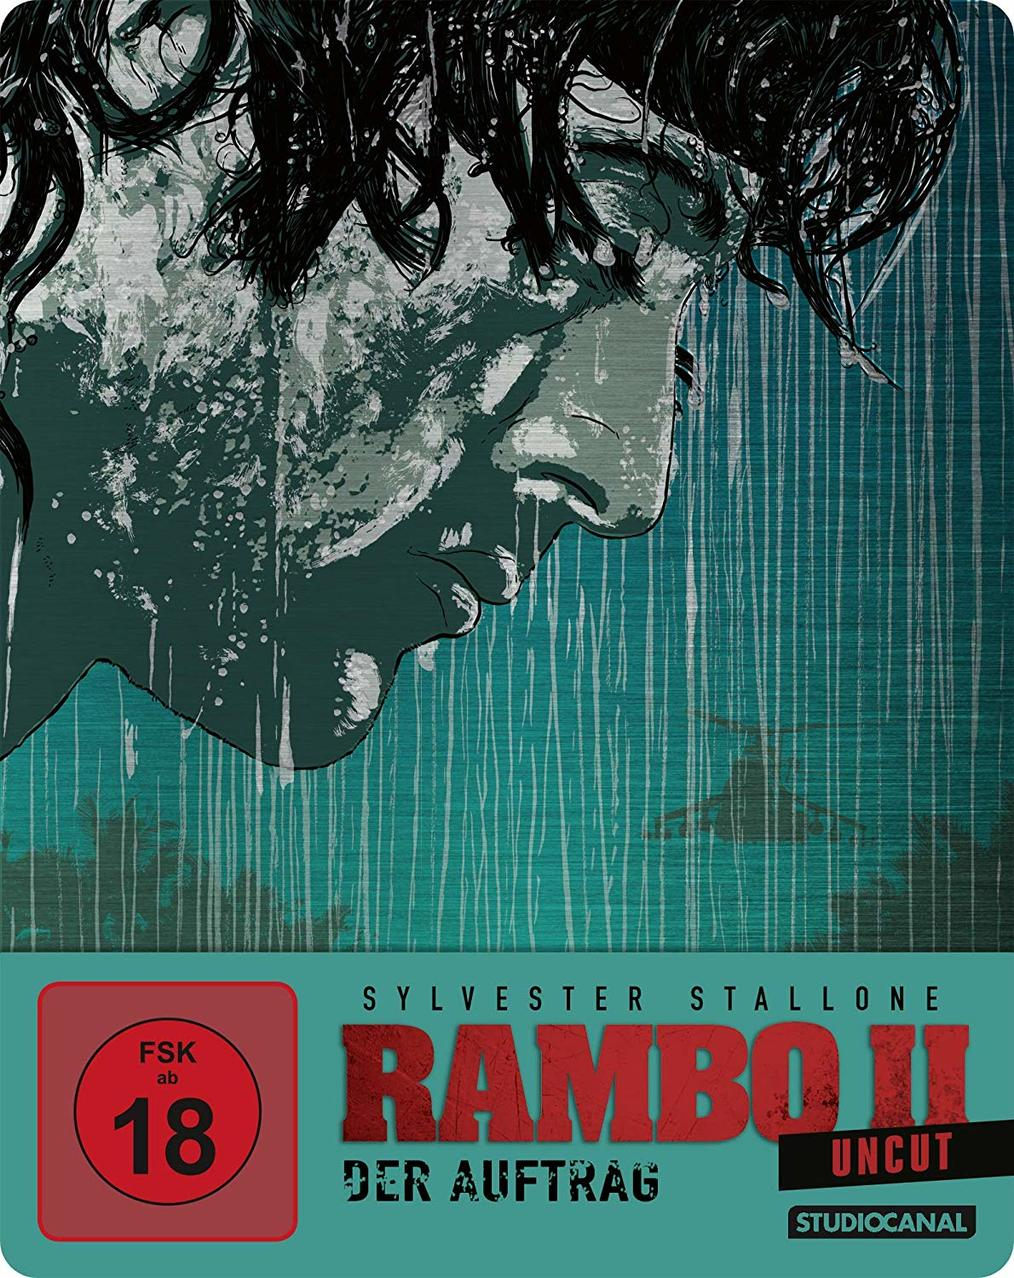 II Auftrag Der Blu-ray Rambo -